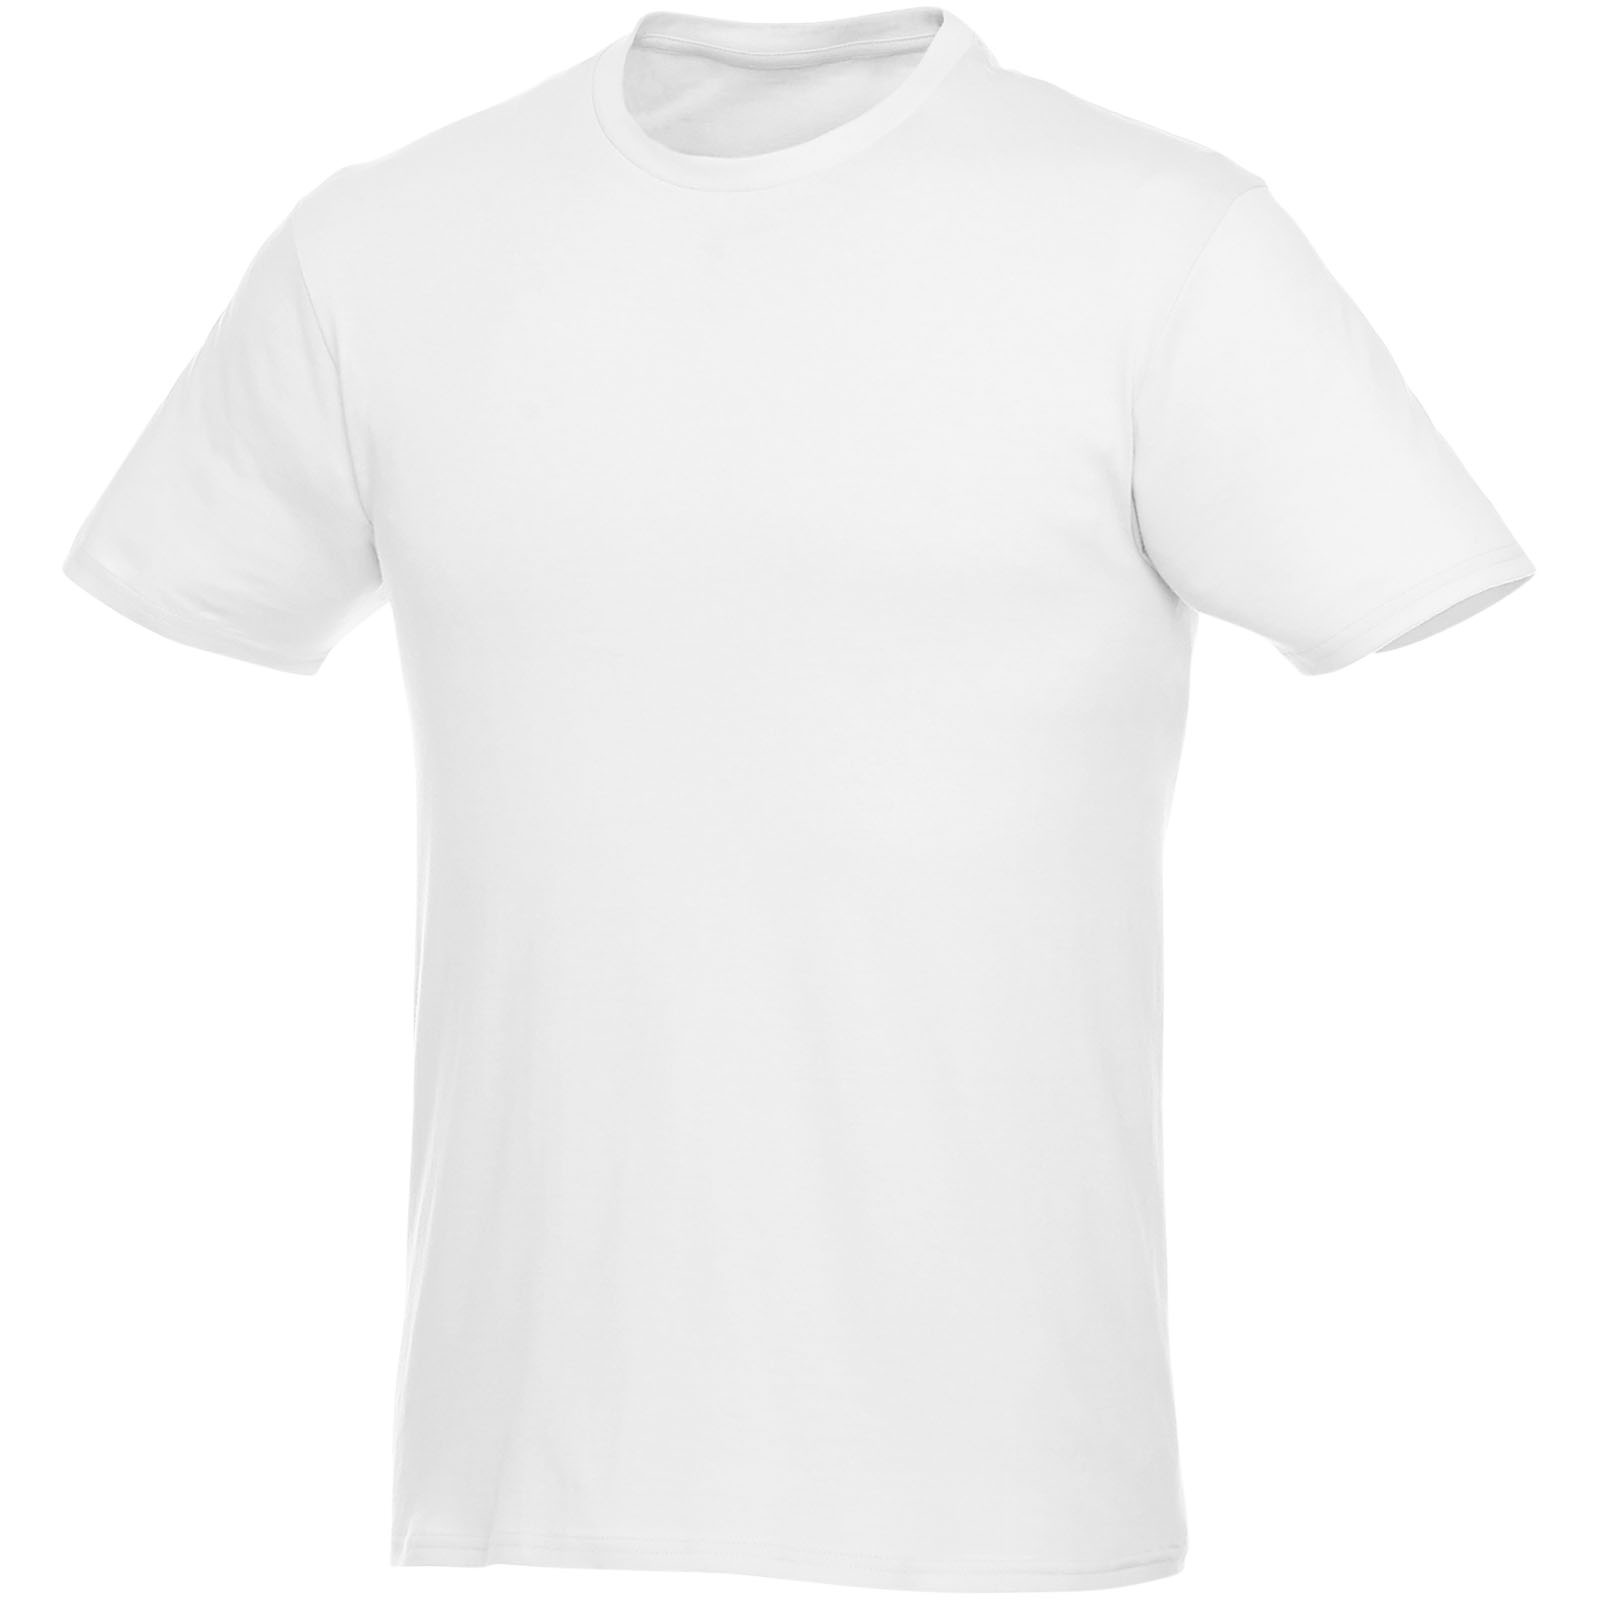 Advertising T-shirts - Heros short sleeve men's t-shirt